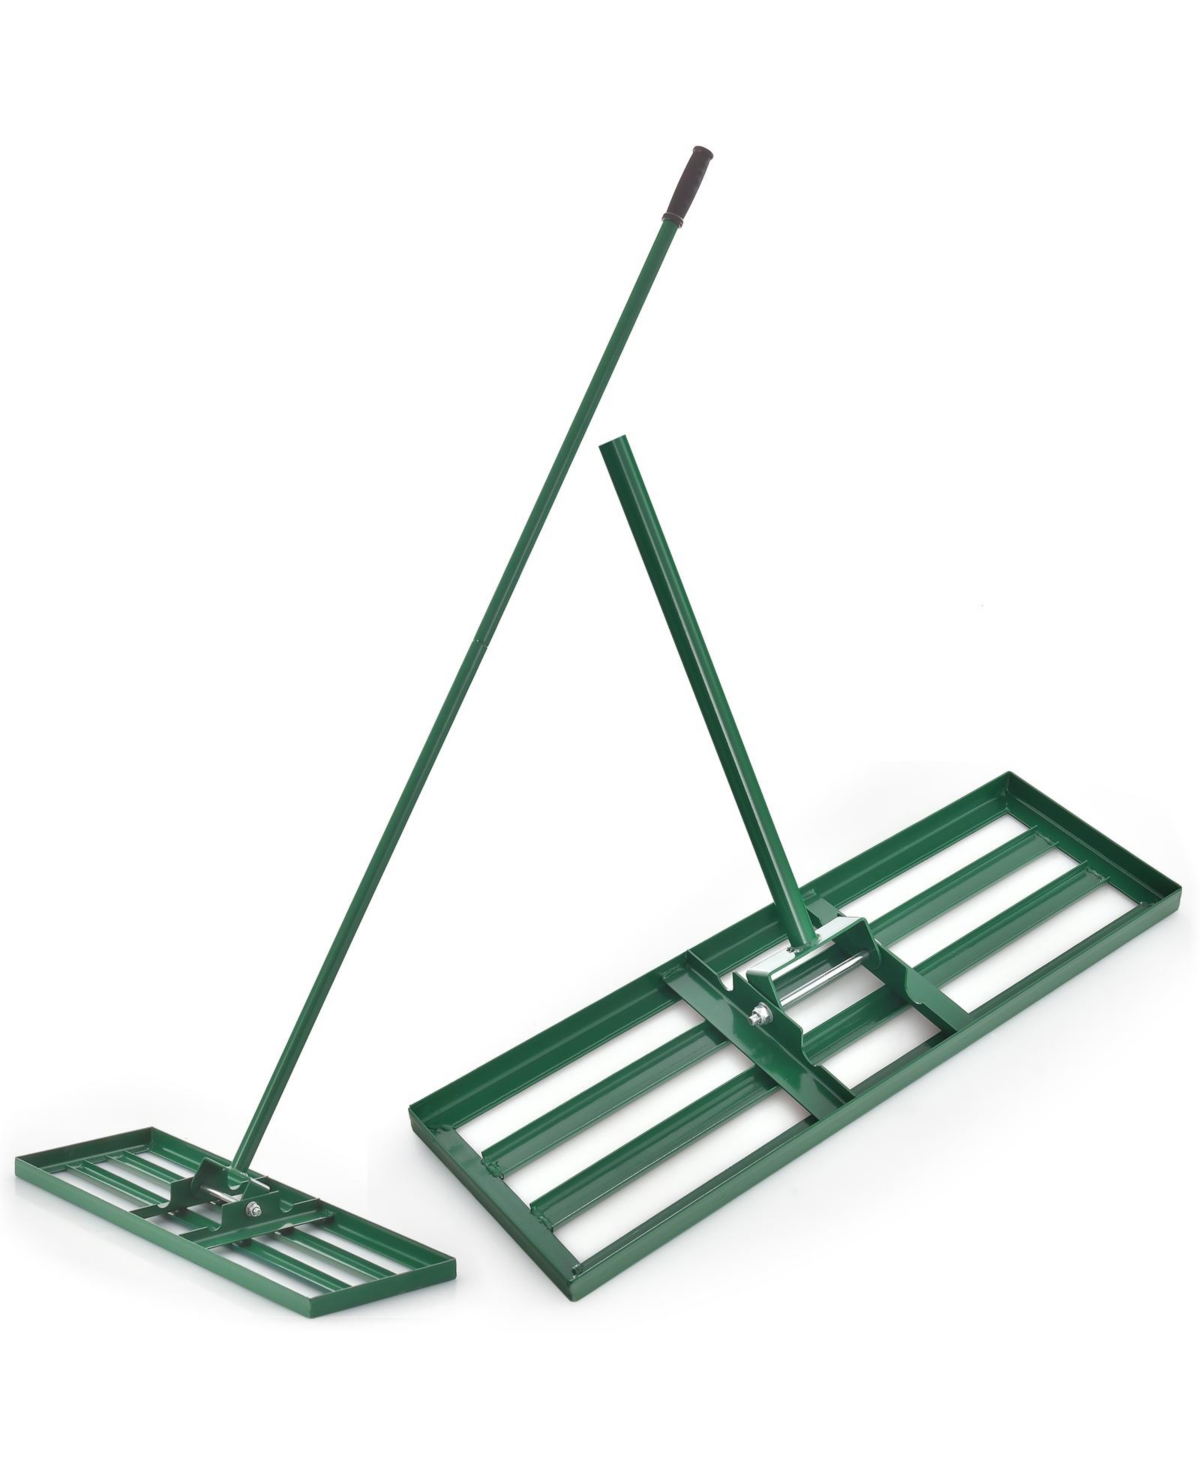 30/36/42 x 10 Inch Lawn Leveling Rake with Ergonomic Handle - Green